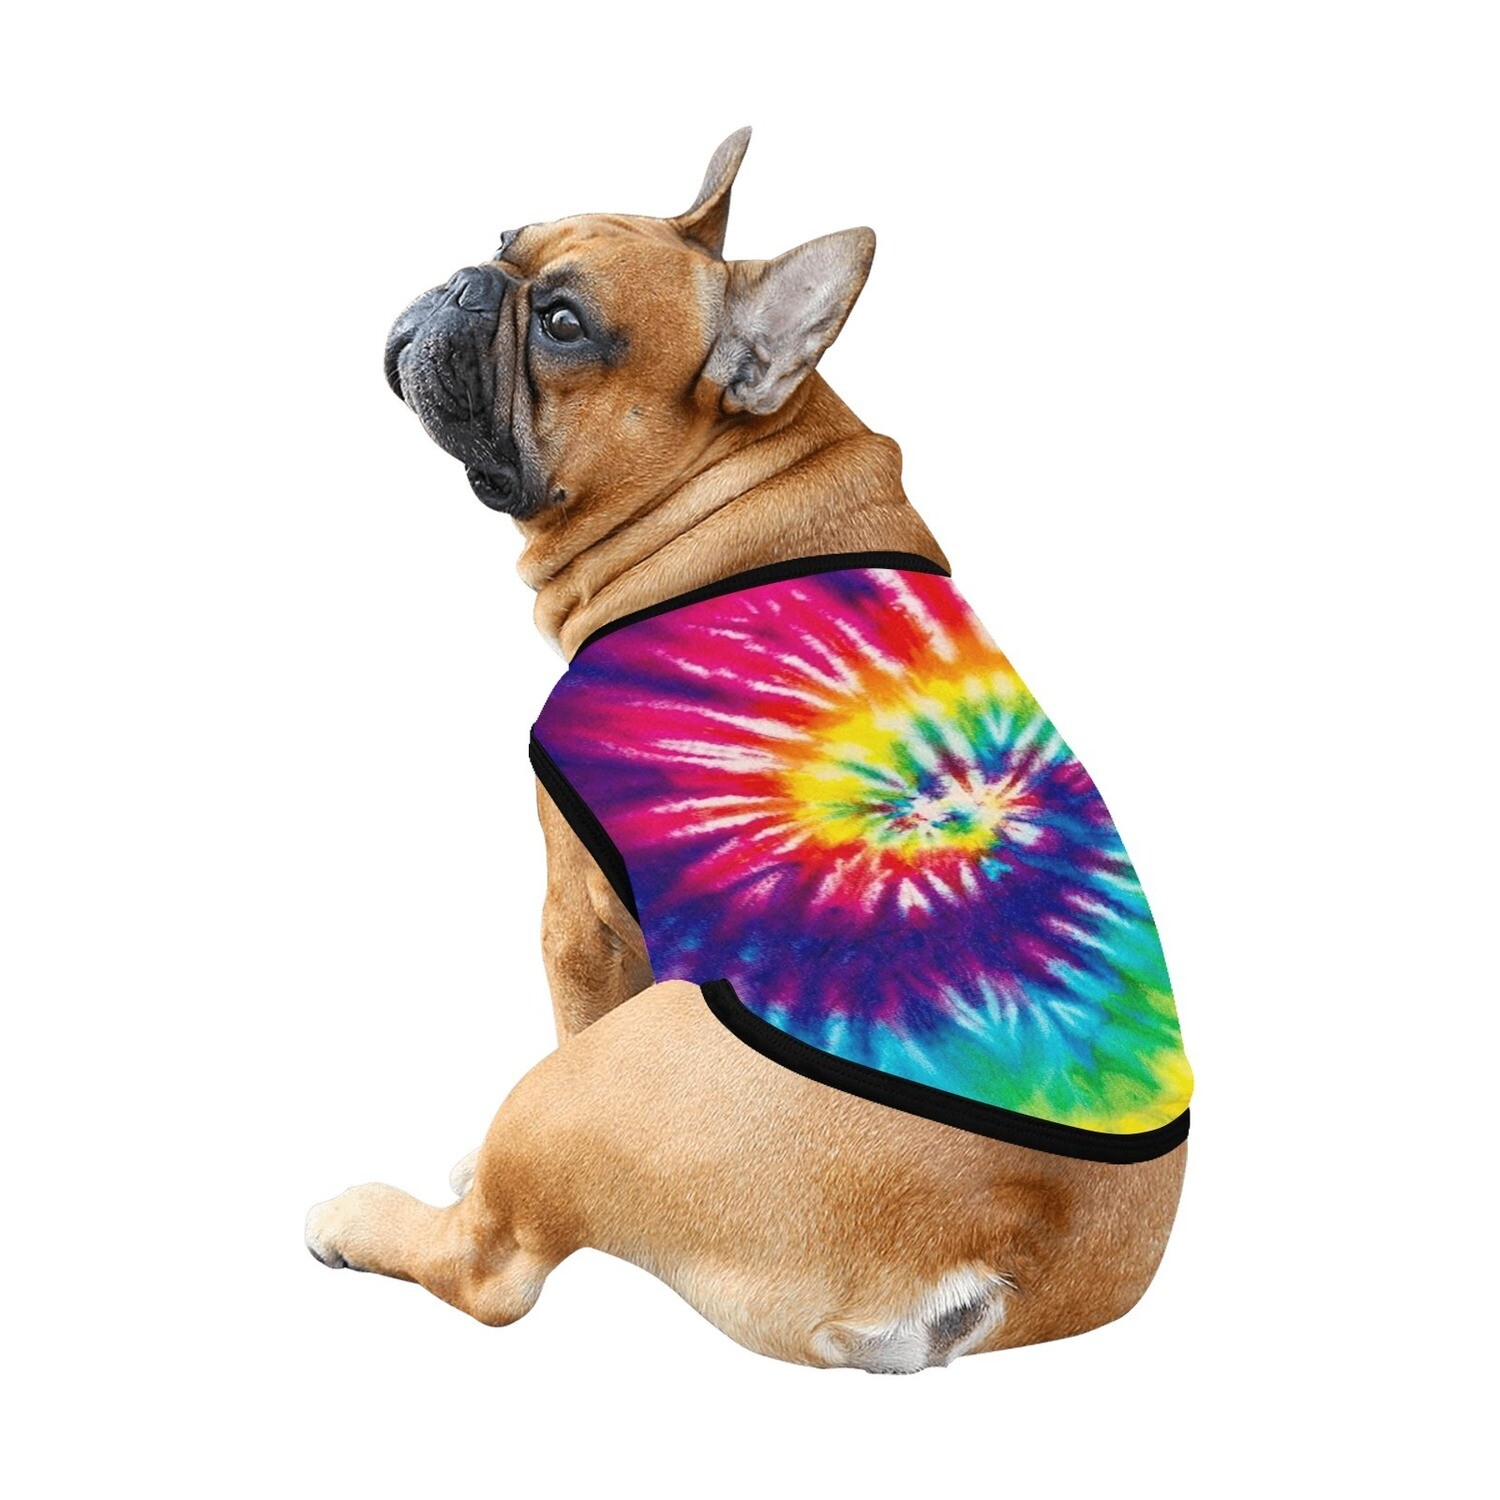 🐕☮︎ Dog t-shirt rainbow Tie dye, Summer, Hippie dog shirt, dog clothes, dog tank top, dog clothing, dog gift, dog costume, 7 sizes XS to 3XL, gift